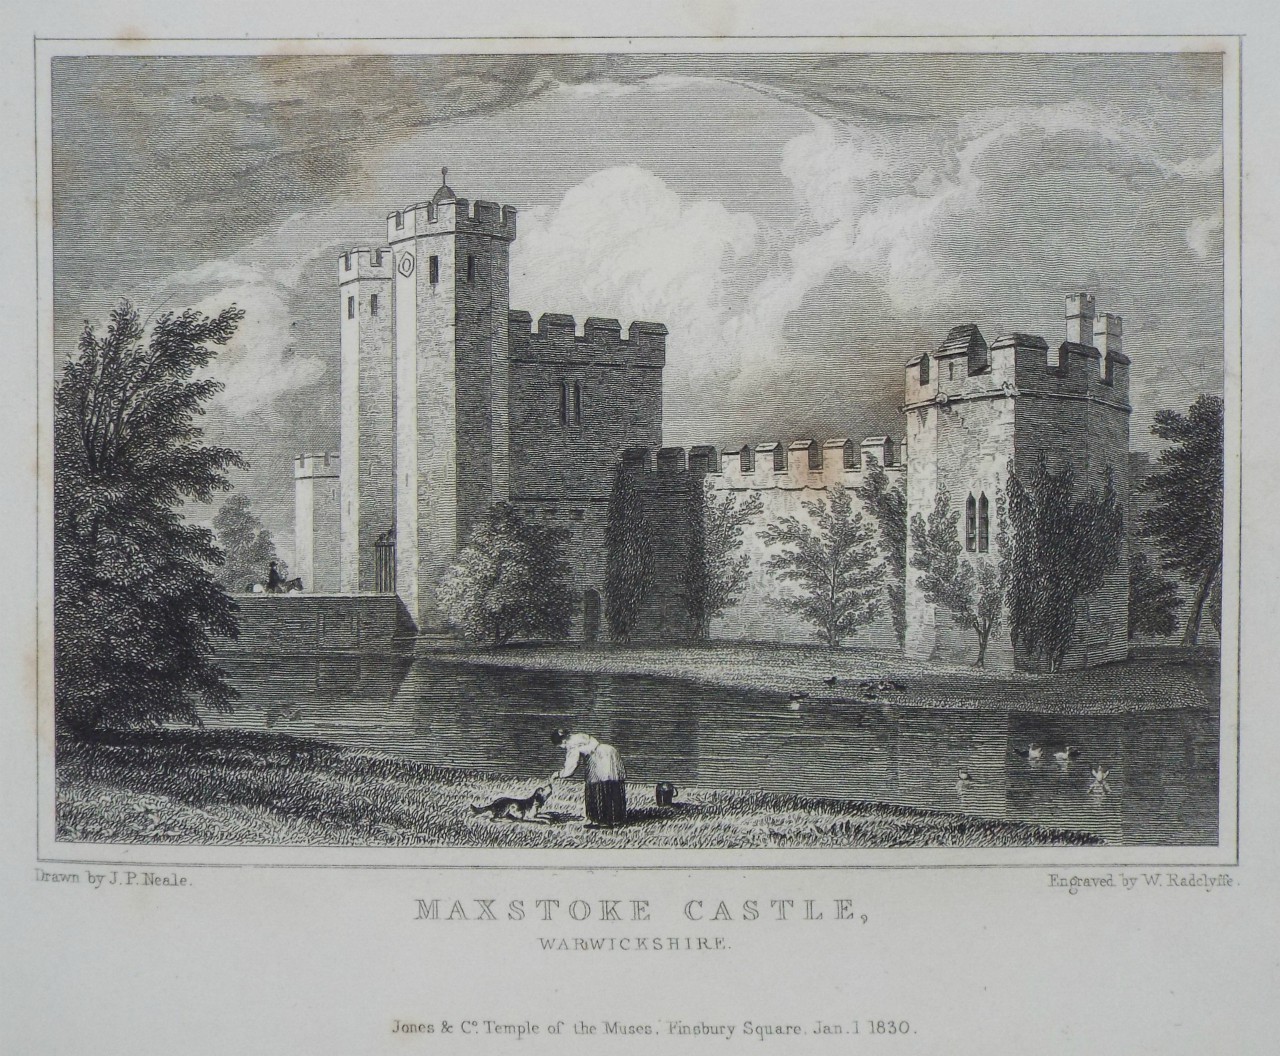 Print - Maxtoke Castle, Warwickshire. - Radclyffe